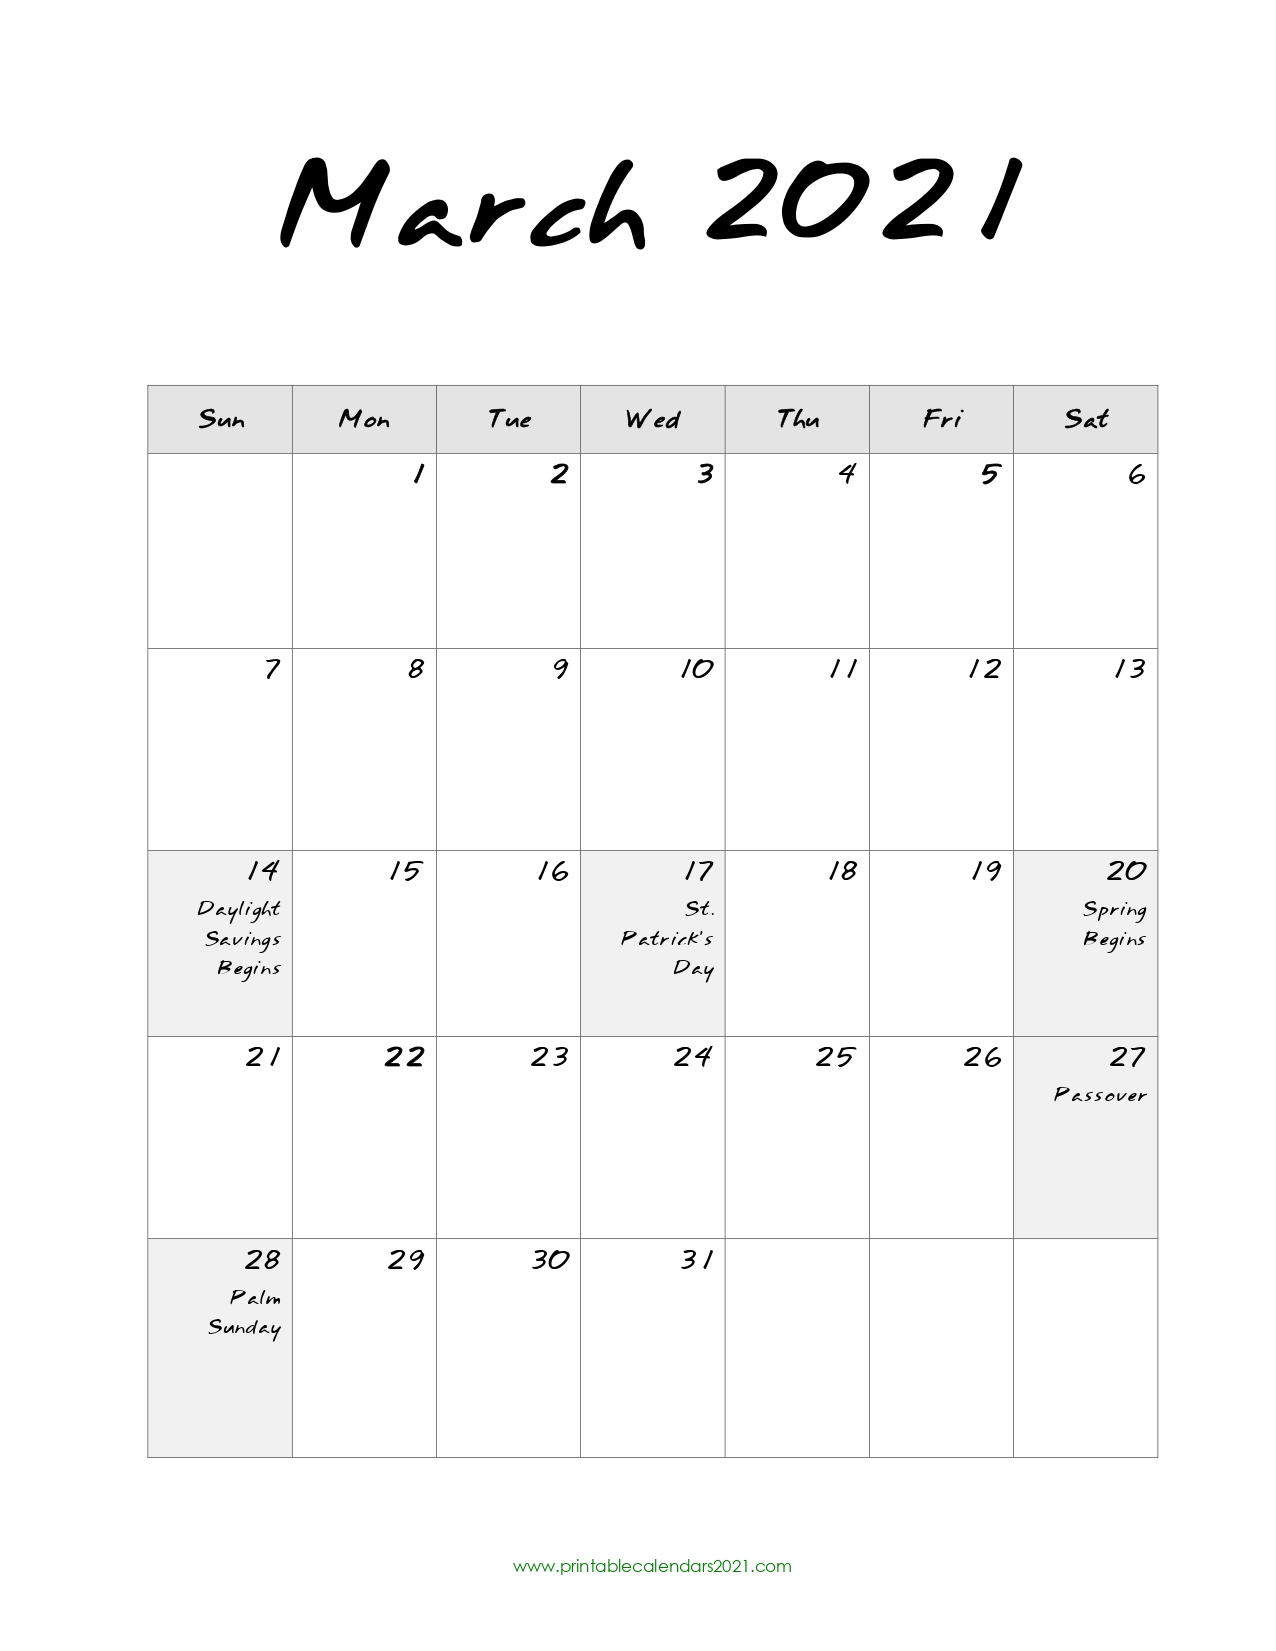 Printable Calendar Page March 2021 : Printable March 2021